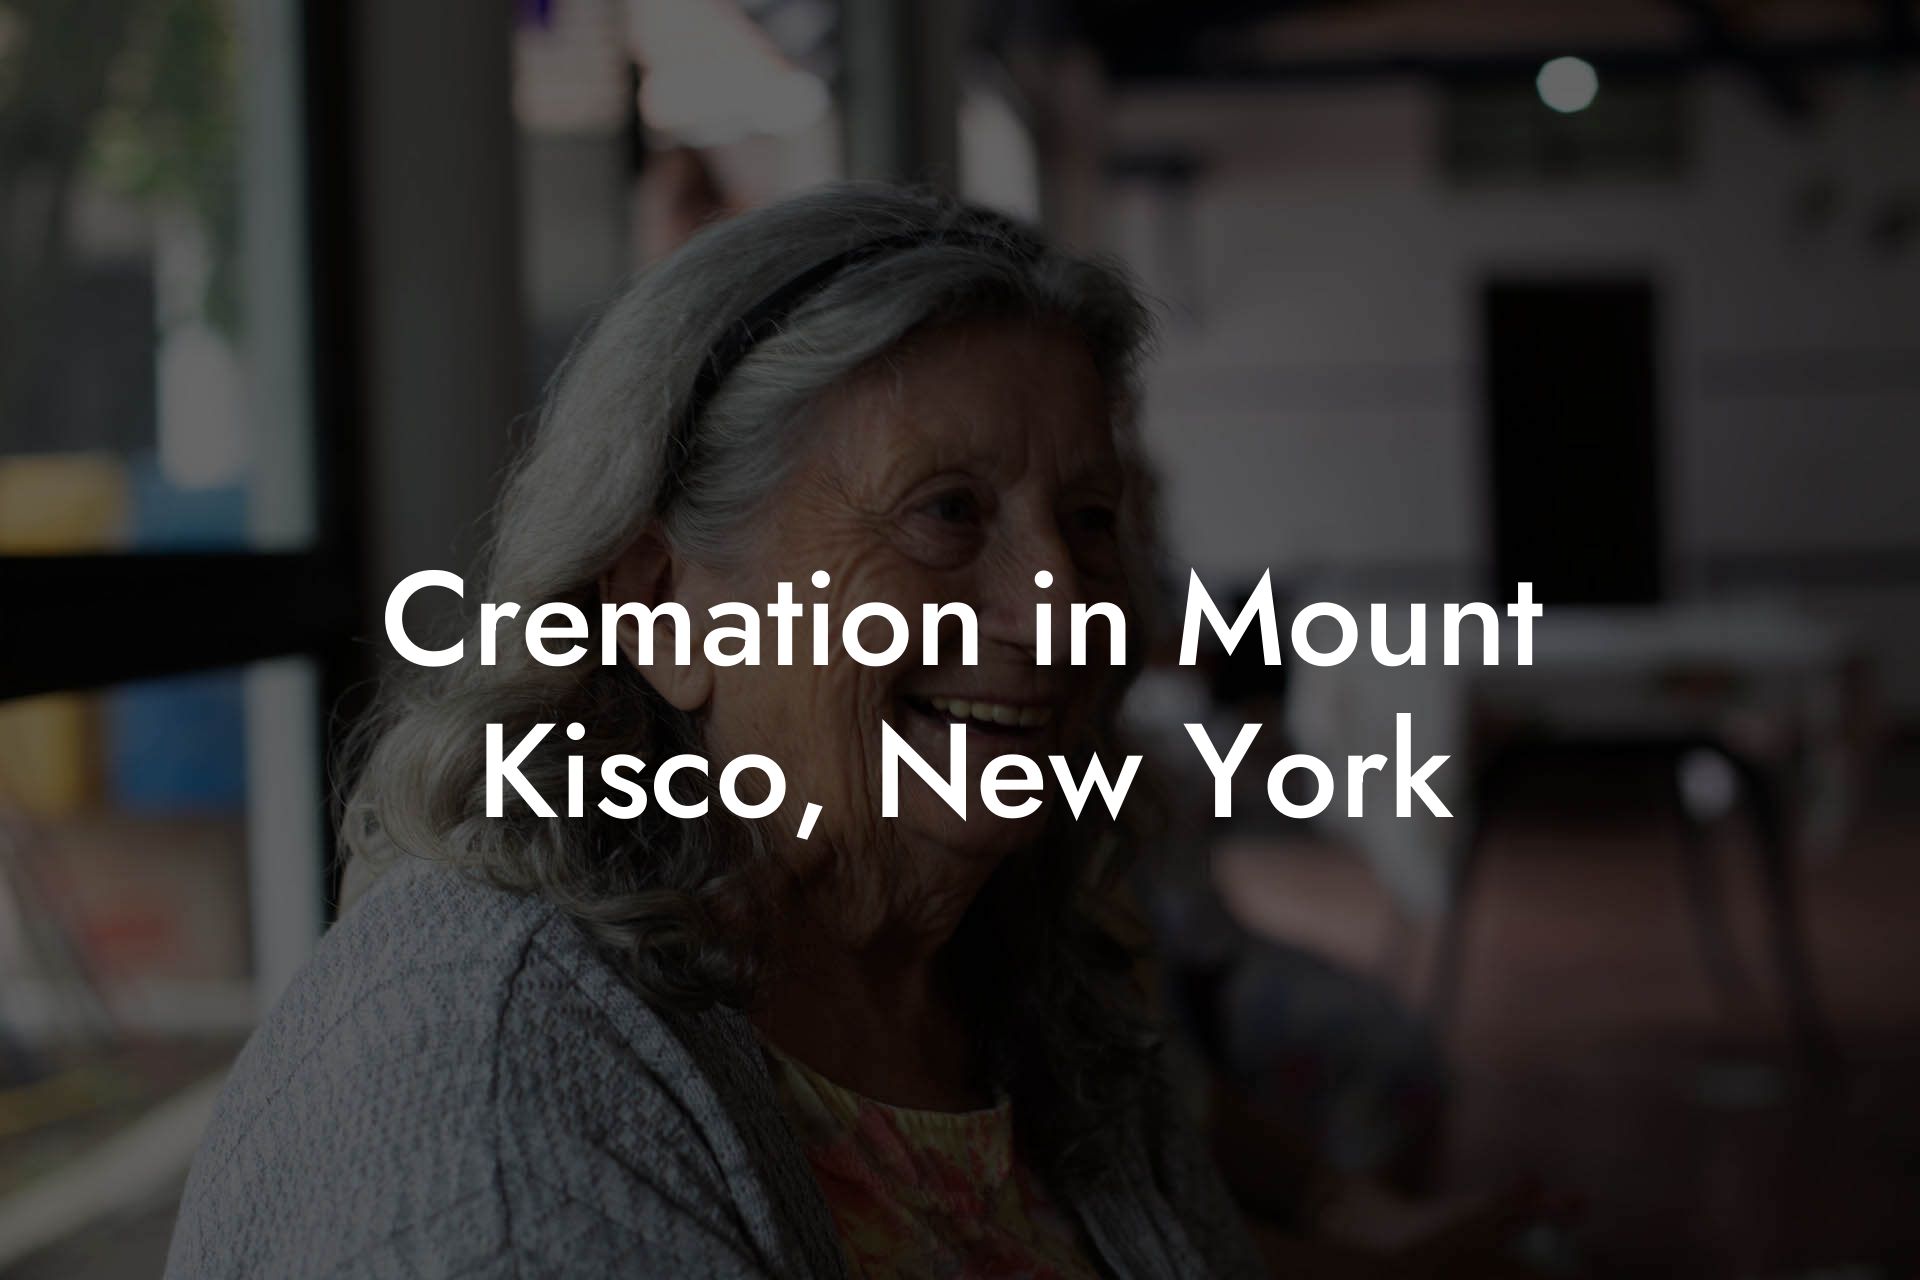 Cremation in Mount Kisco, New York